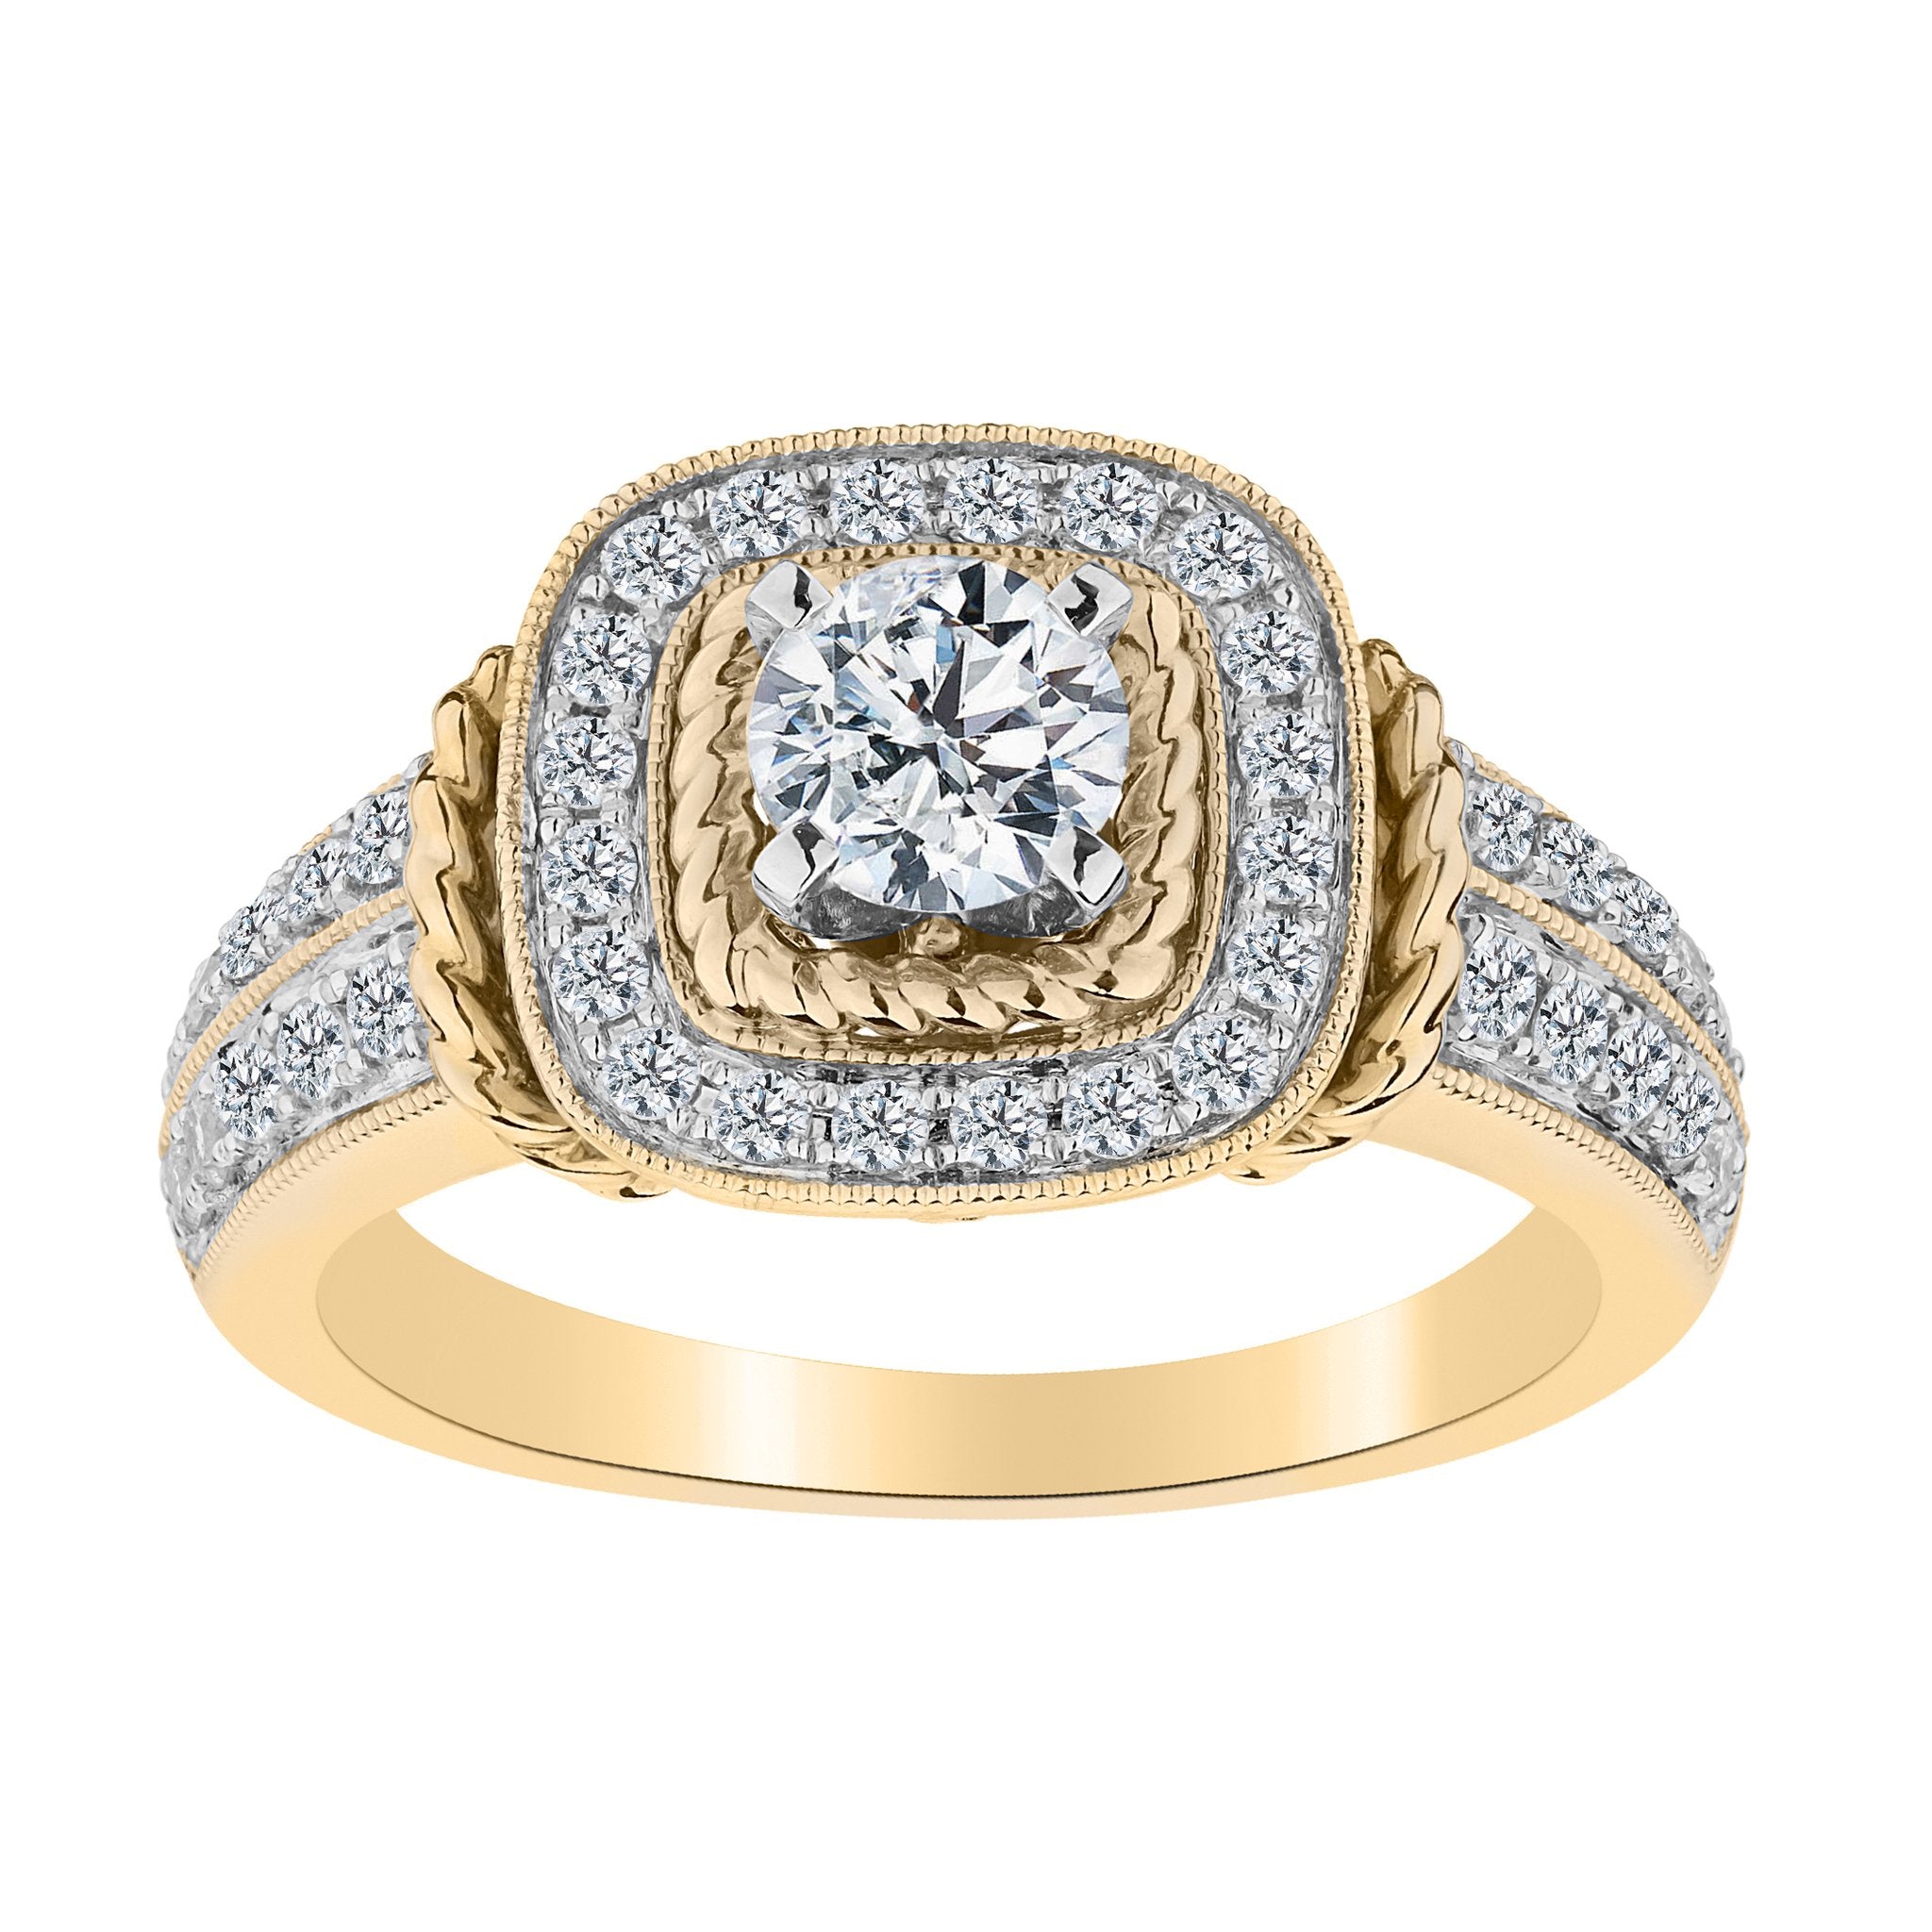 1.00 CARAT DIAMOND RING, 10kt YELLOW GOLD - Griffin Jewellery Designs